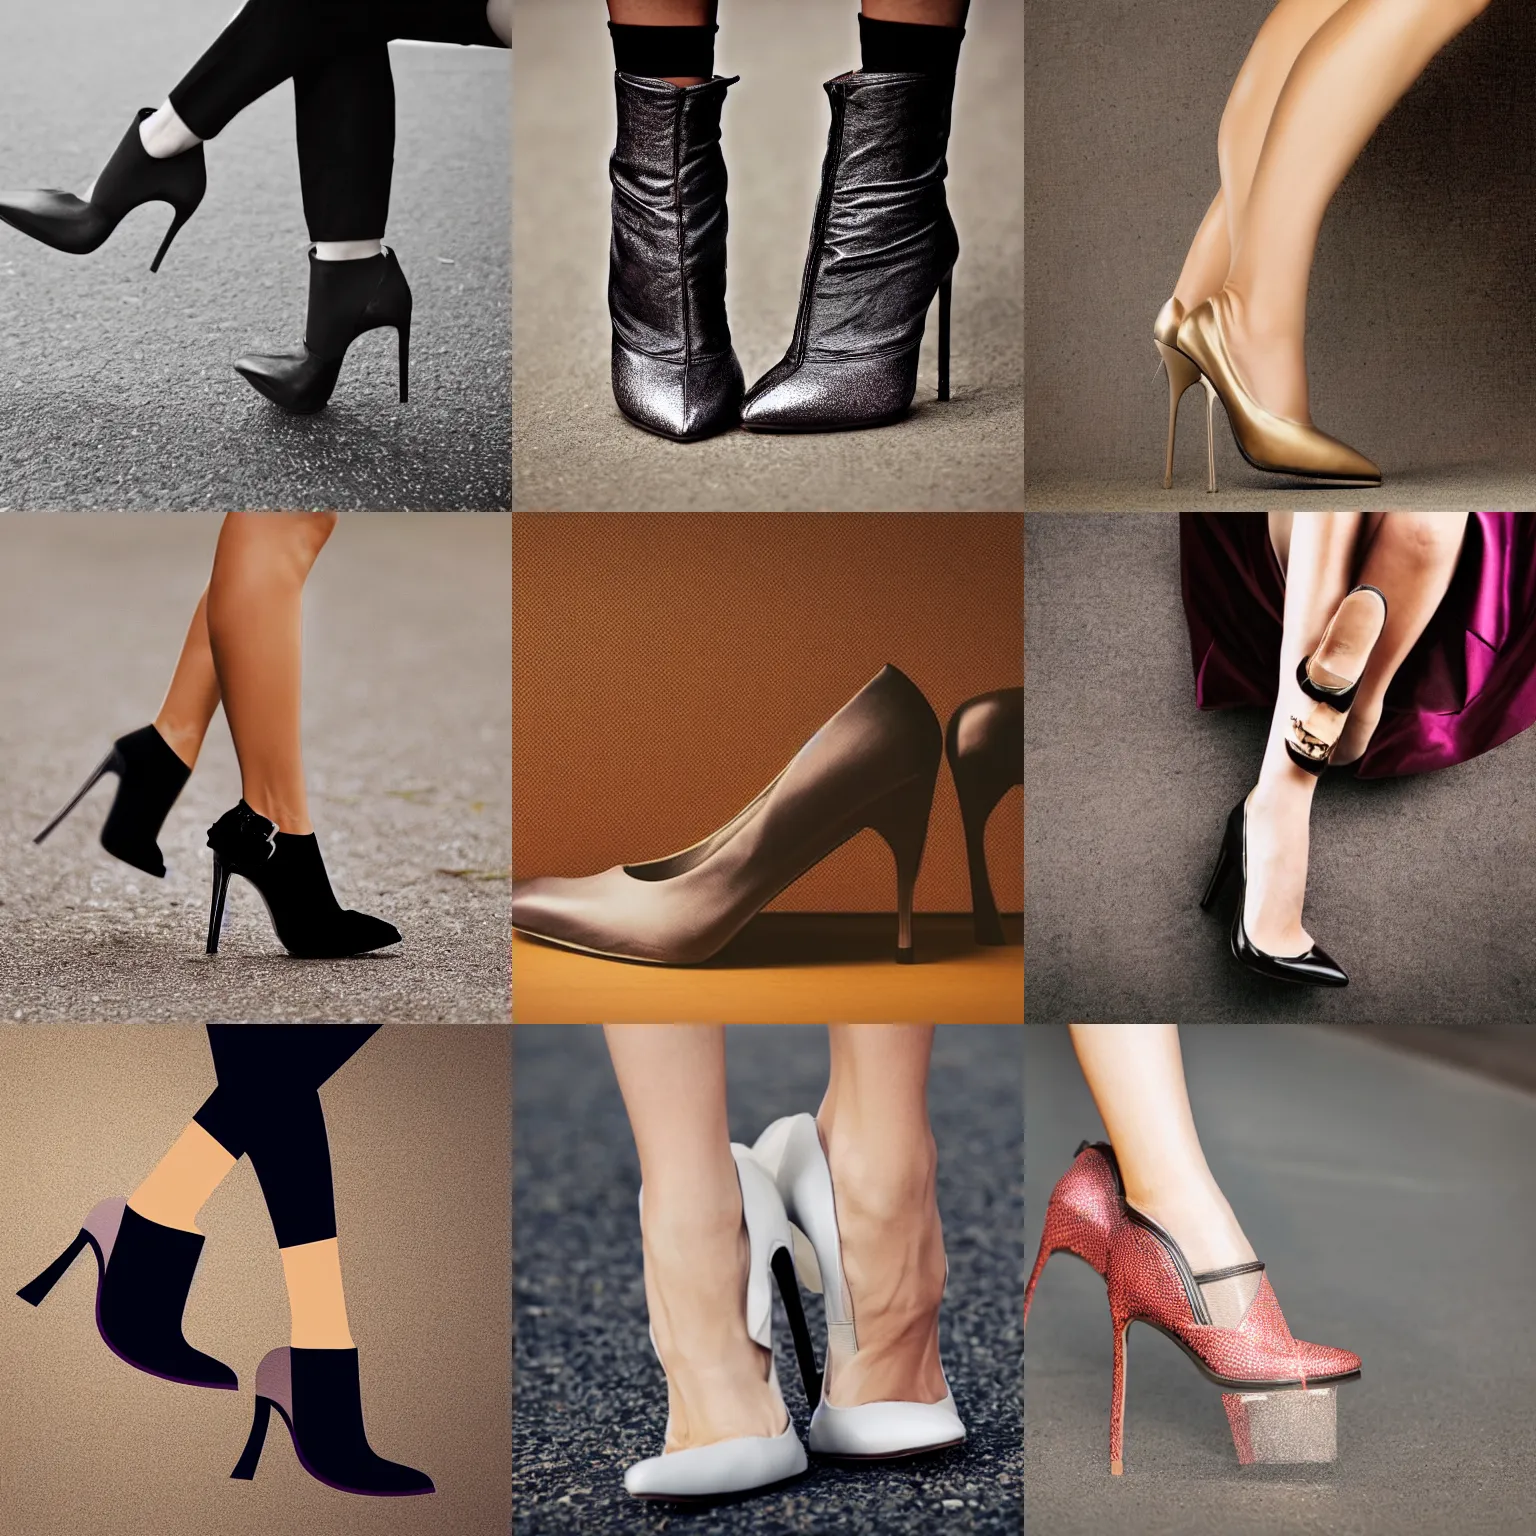 Prompt: A high heeled women's shoe